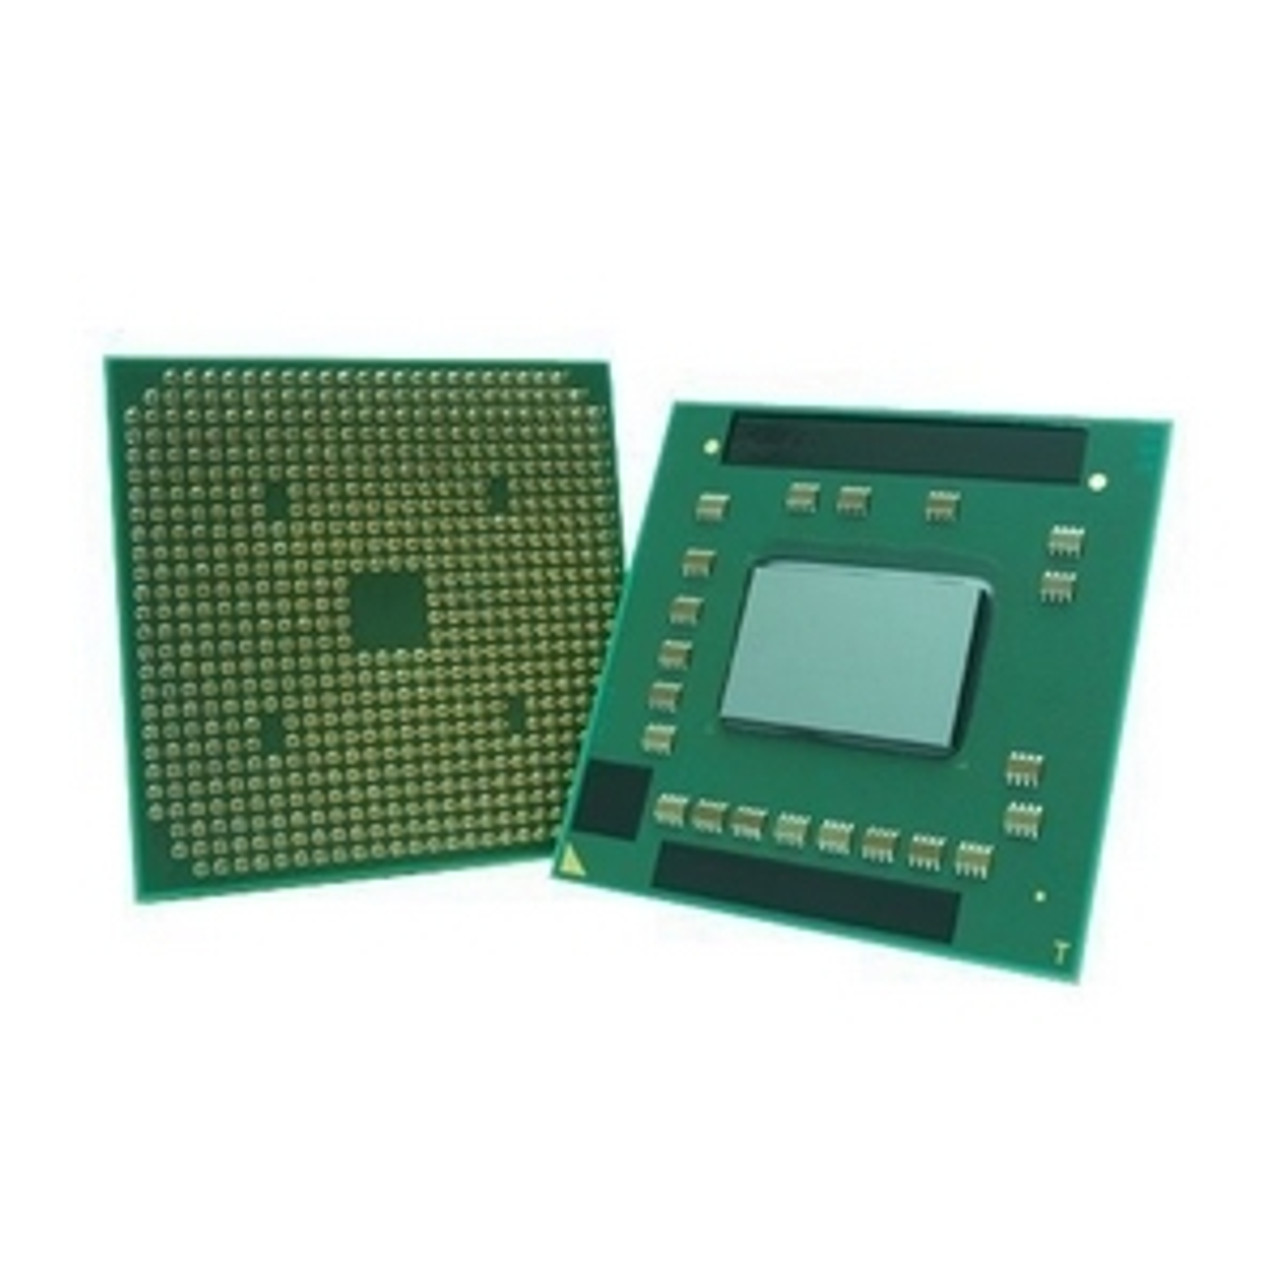 AMD TMZM84DAM23GG